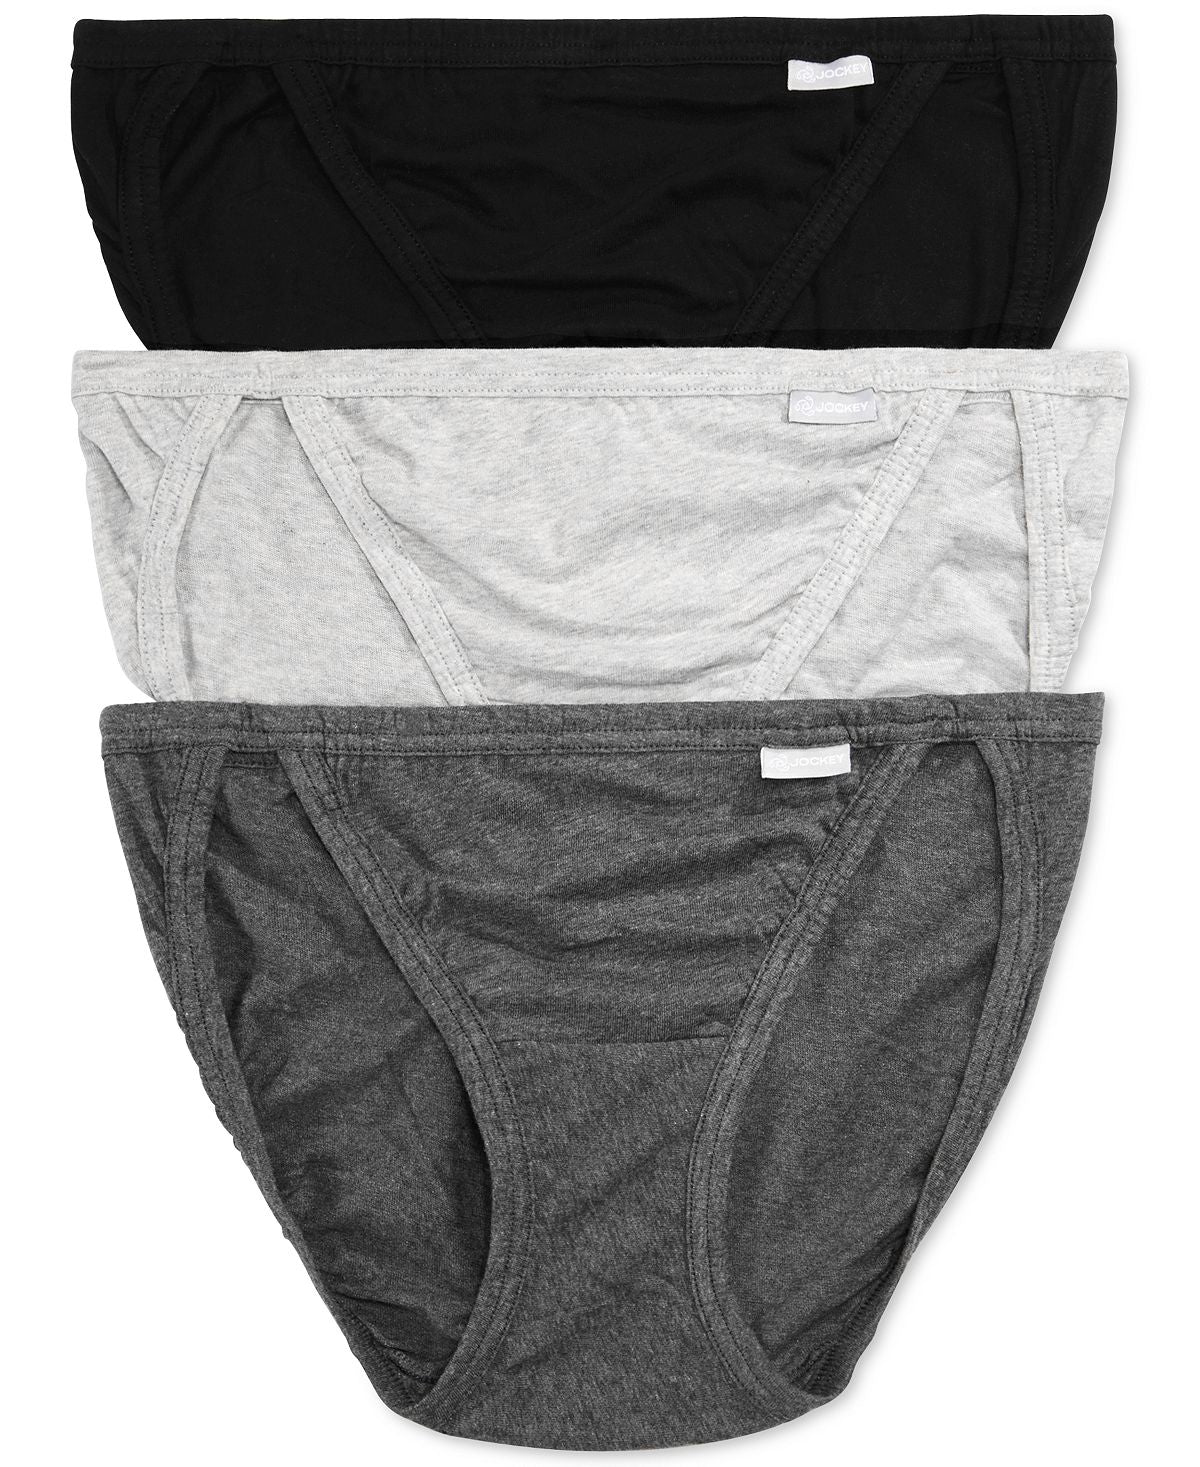 Jockey Men's Underwear Elance String Bikini - 6 Pack, Black, S : :  Clothing, Shoes & Accessories